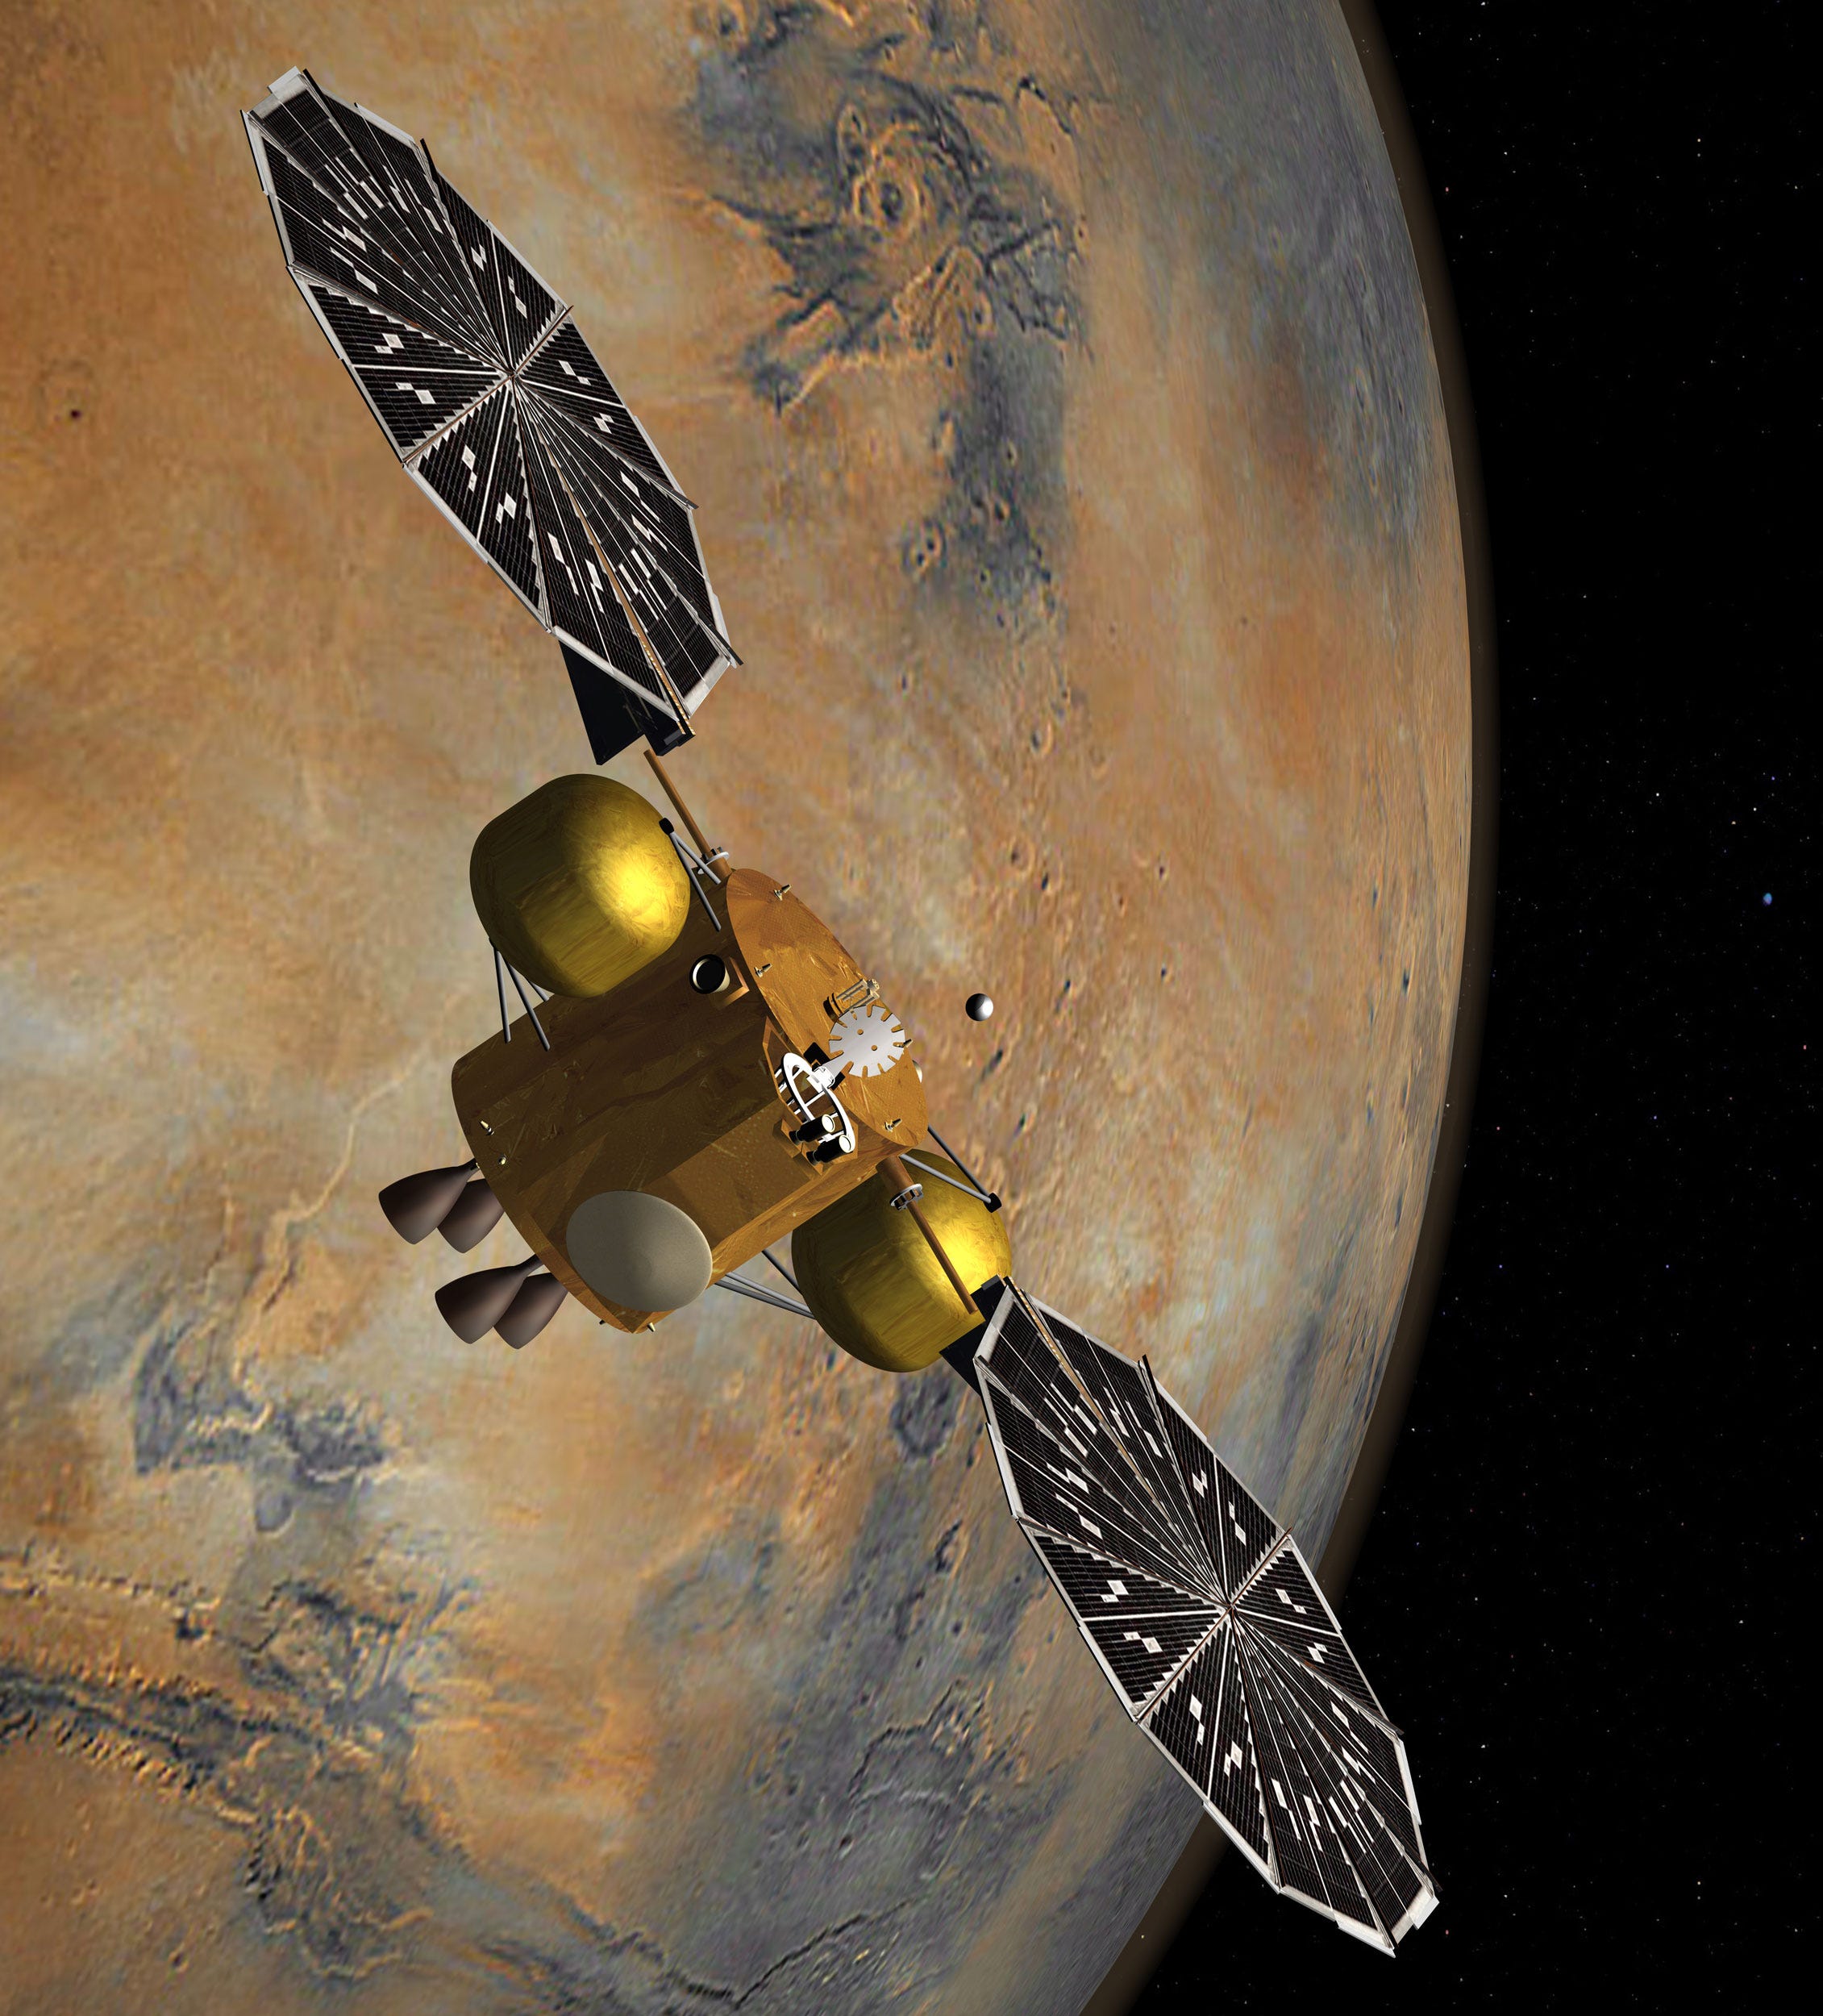 illustration mars orbiting spacecraft capturing small sample container